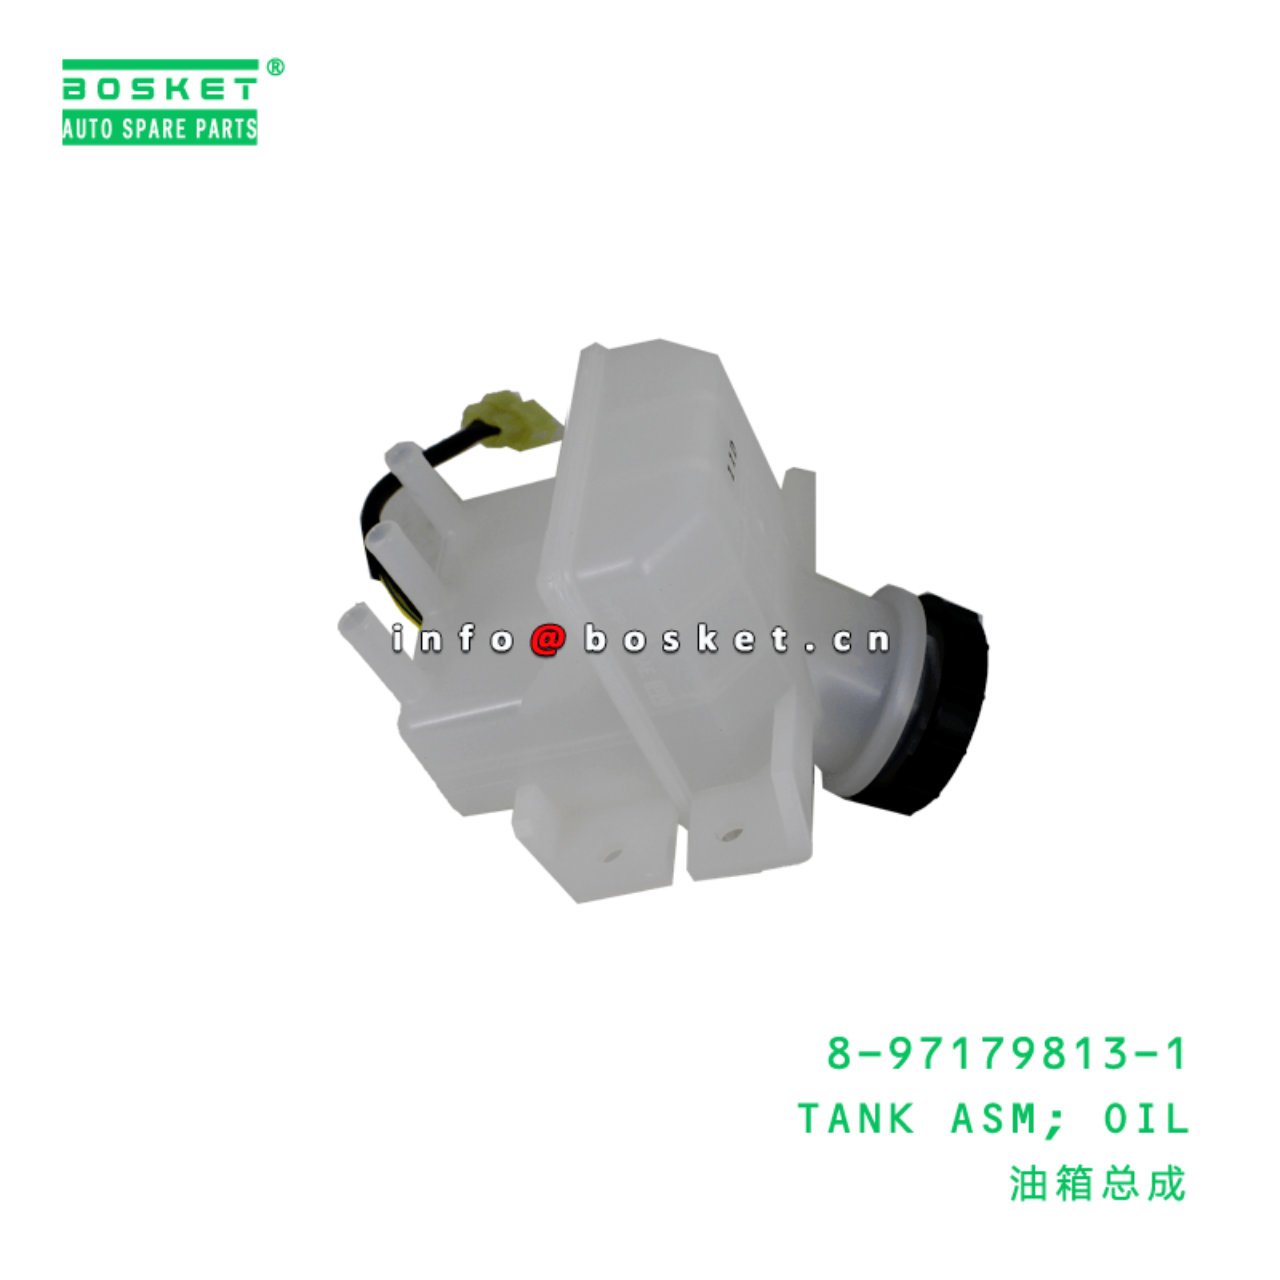 8-97179813-1 Oil Tank Assembly Suitable for ISUZU NHR NKR NPR 8971798131